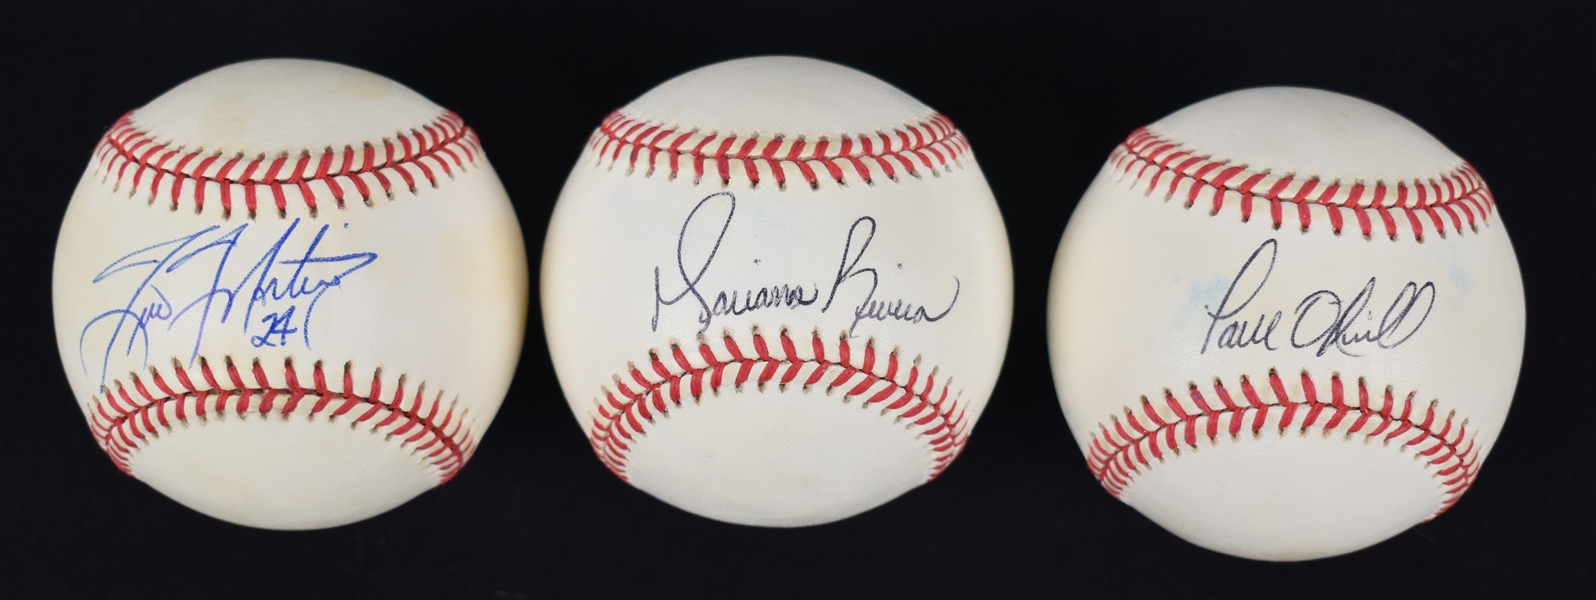 Mariano Rivera Paul ONeil & Tino Martinez Autographed Baseballs w/Puckett Family Provenance